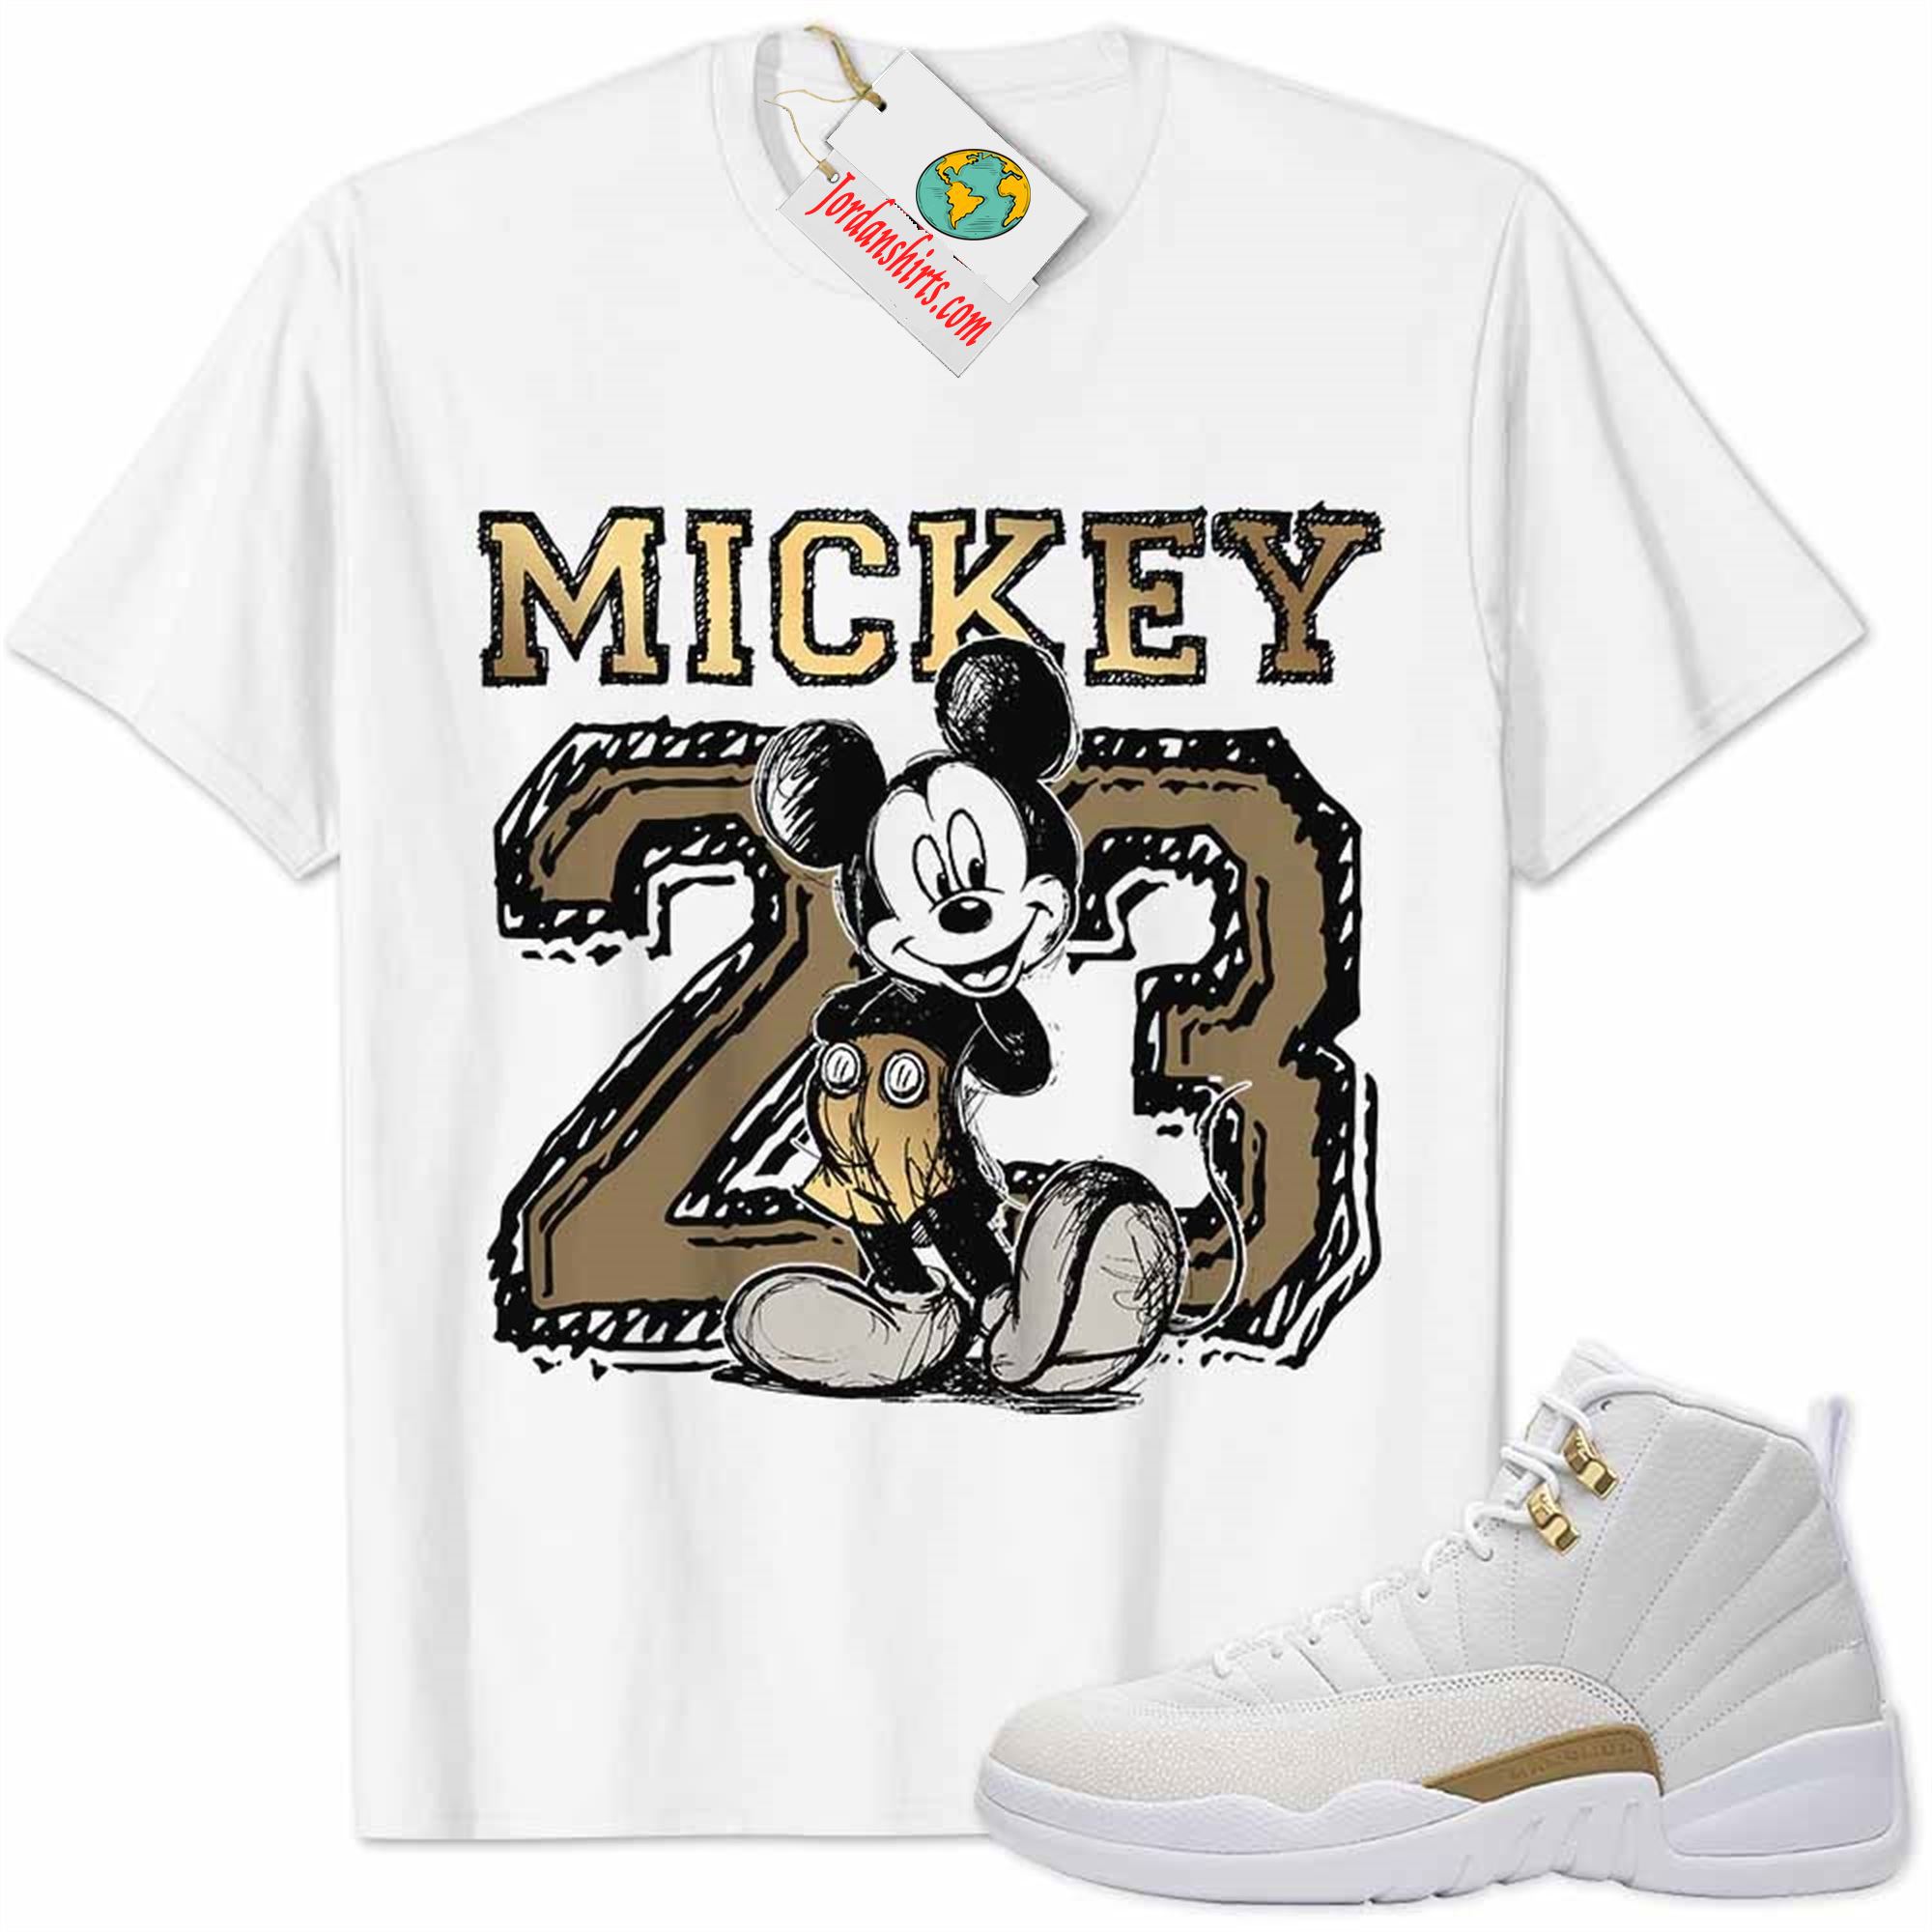 Jordan 12 Shirt, Ovo 12s Shirt Mickey 23 Michael Jordan Number Draw White Plus Size Up To 5xl